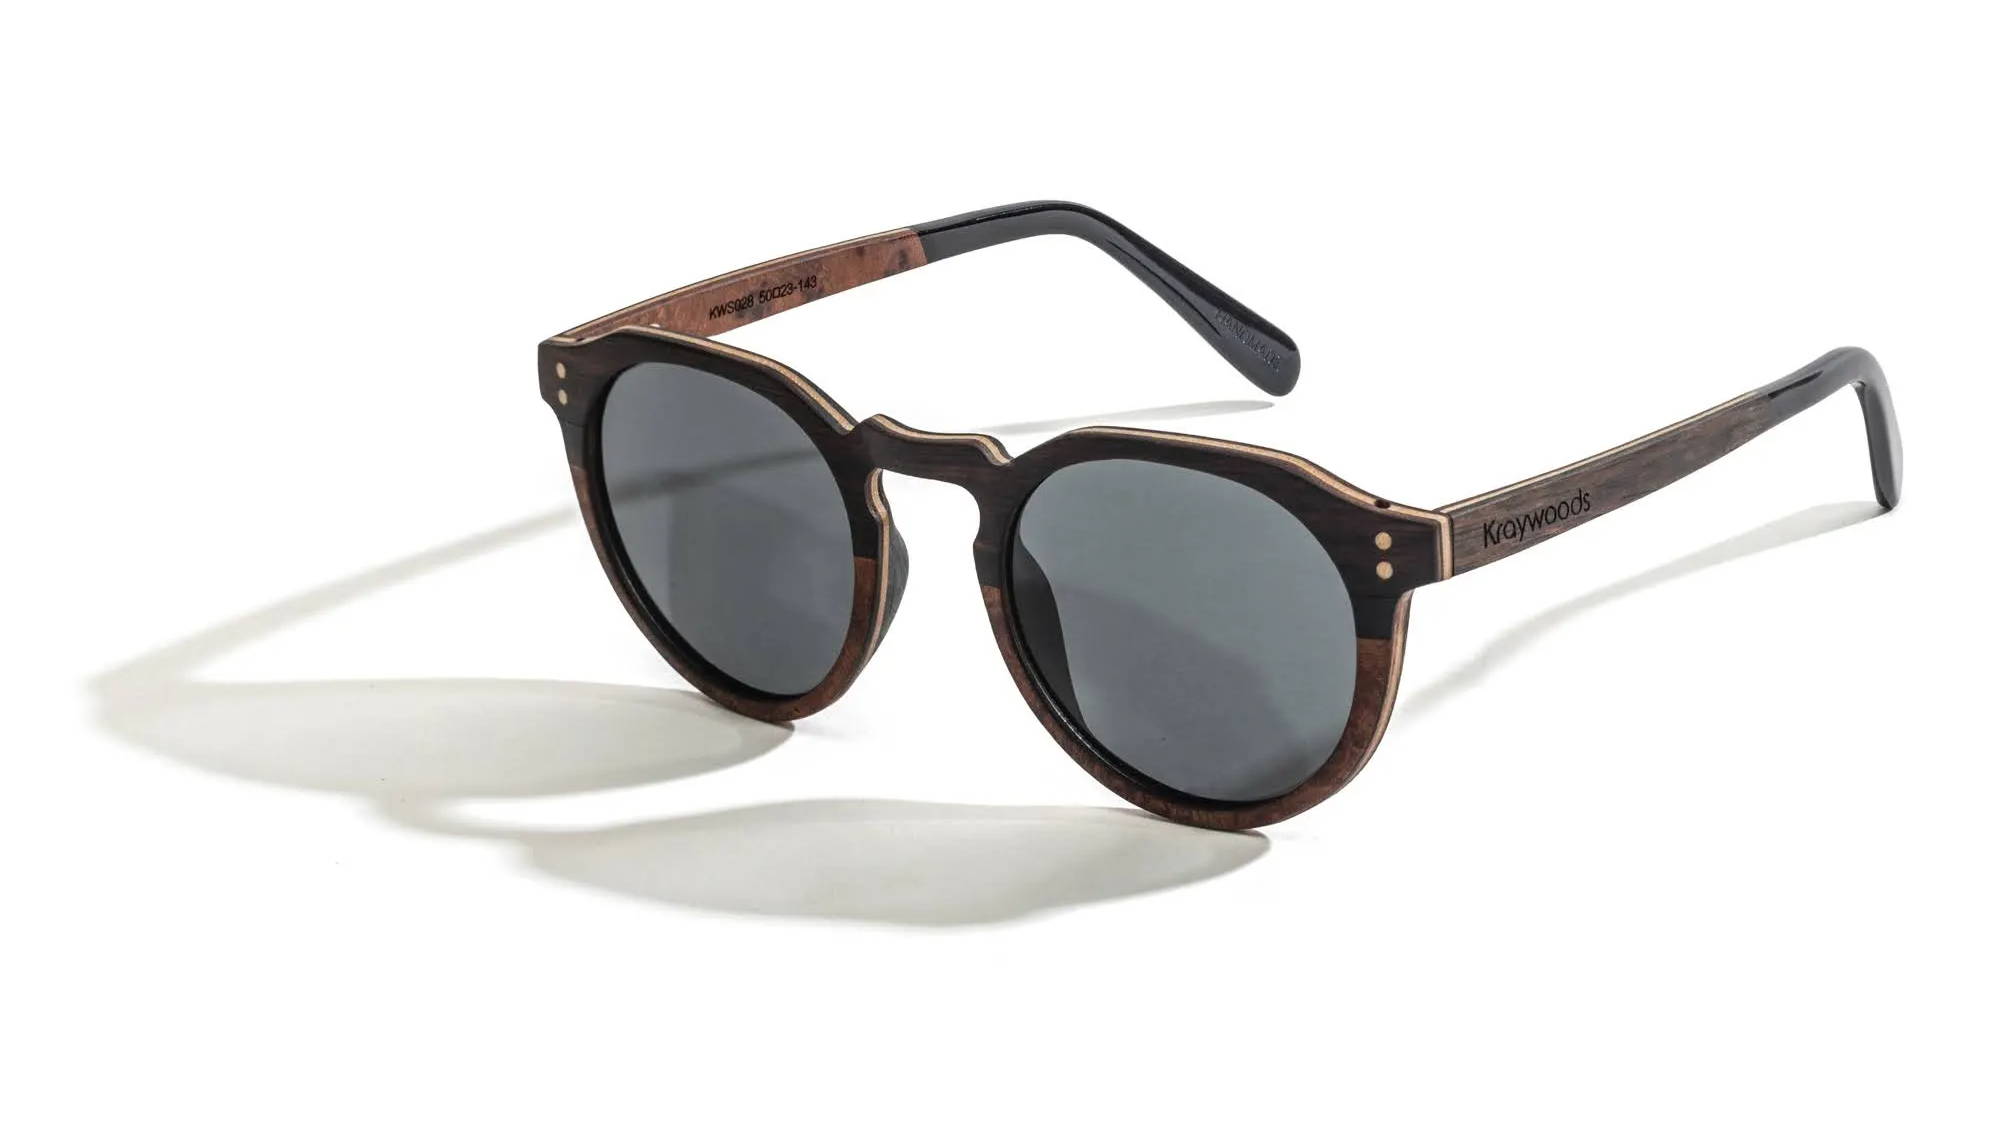 Roselanc, Two-tone Wooden Sunglasses with polarized lenses